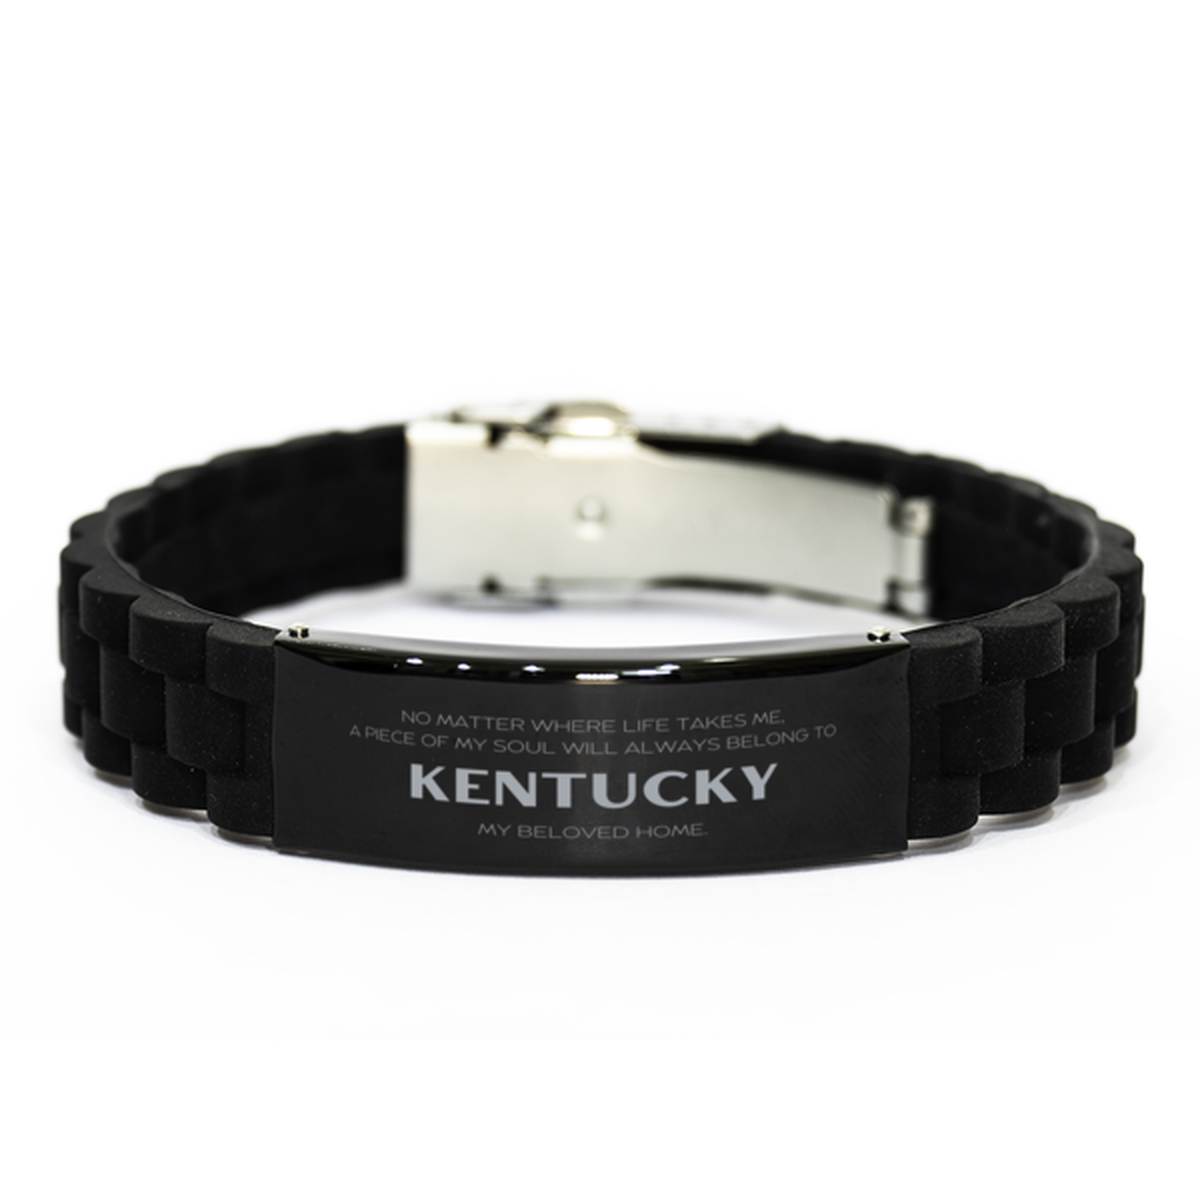 Love Kentucky State Gifts, My soul will always belong to Kentucky, Proud Black Glidelock Clasp Bracelet, Birthday Unique Gifts For Kentucky Men, Women, Friends